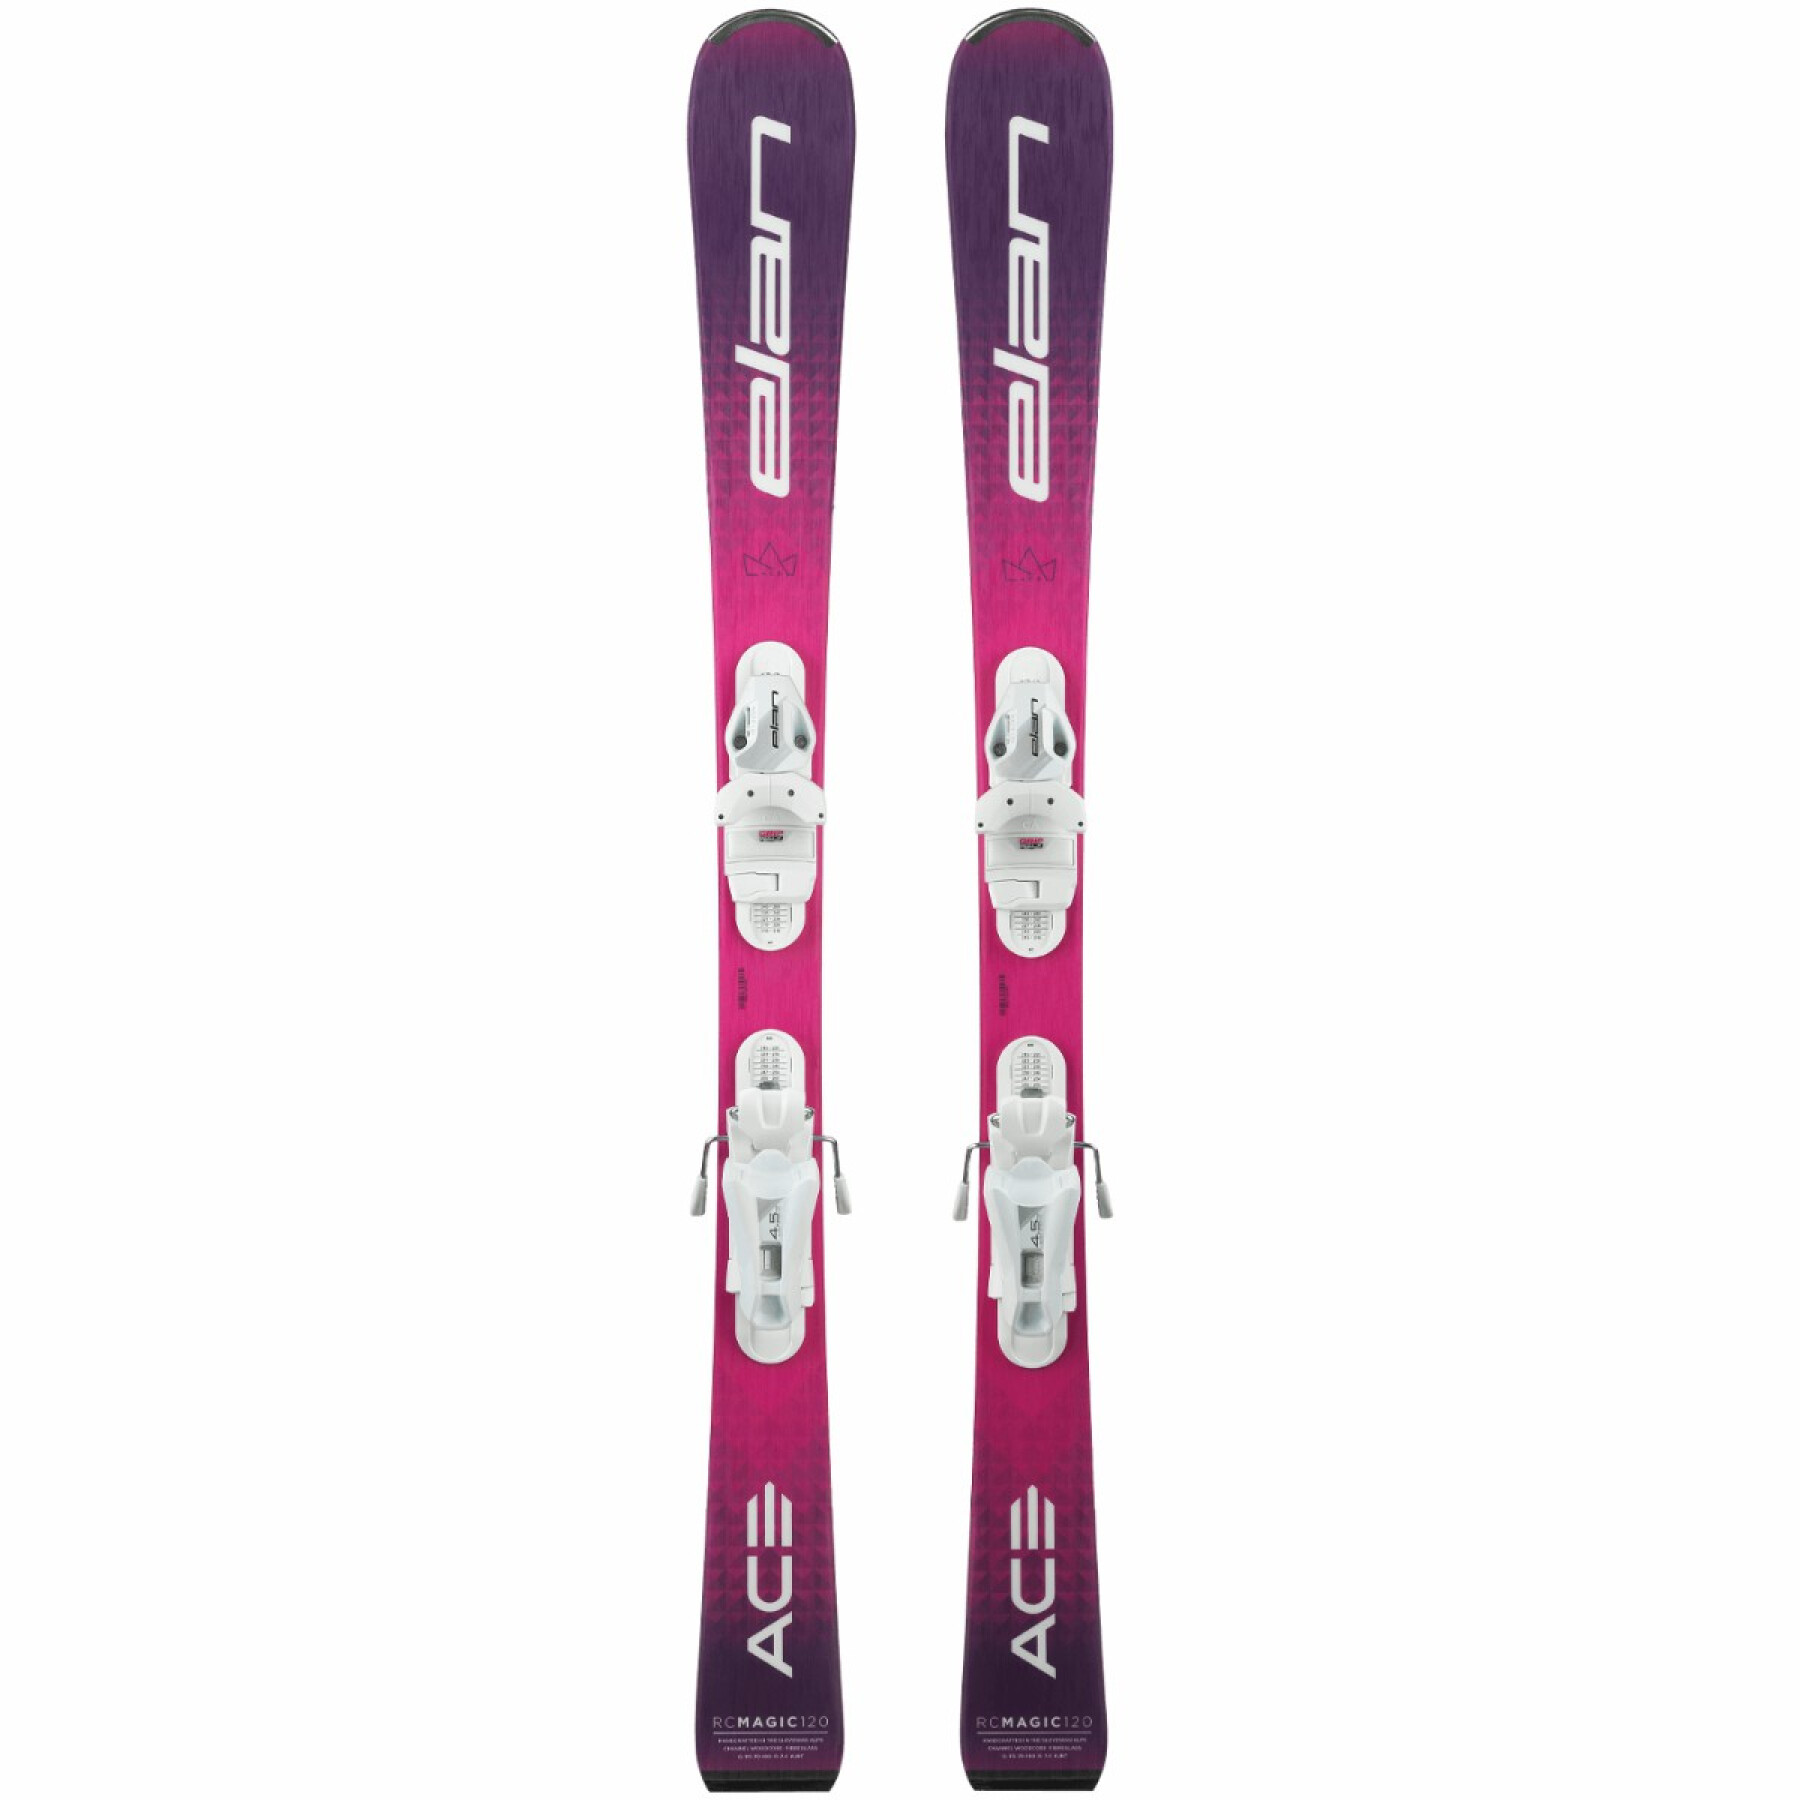 Pack skis RC Magic4.5 avec fixations enfant Elan